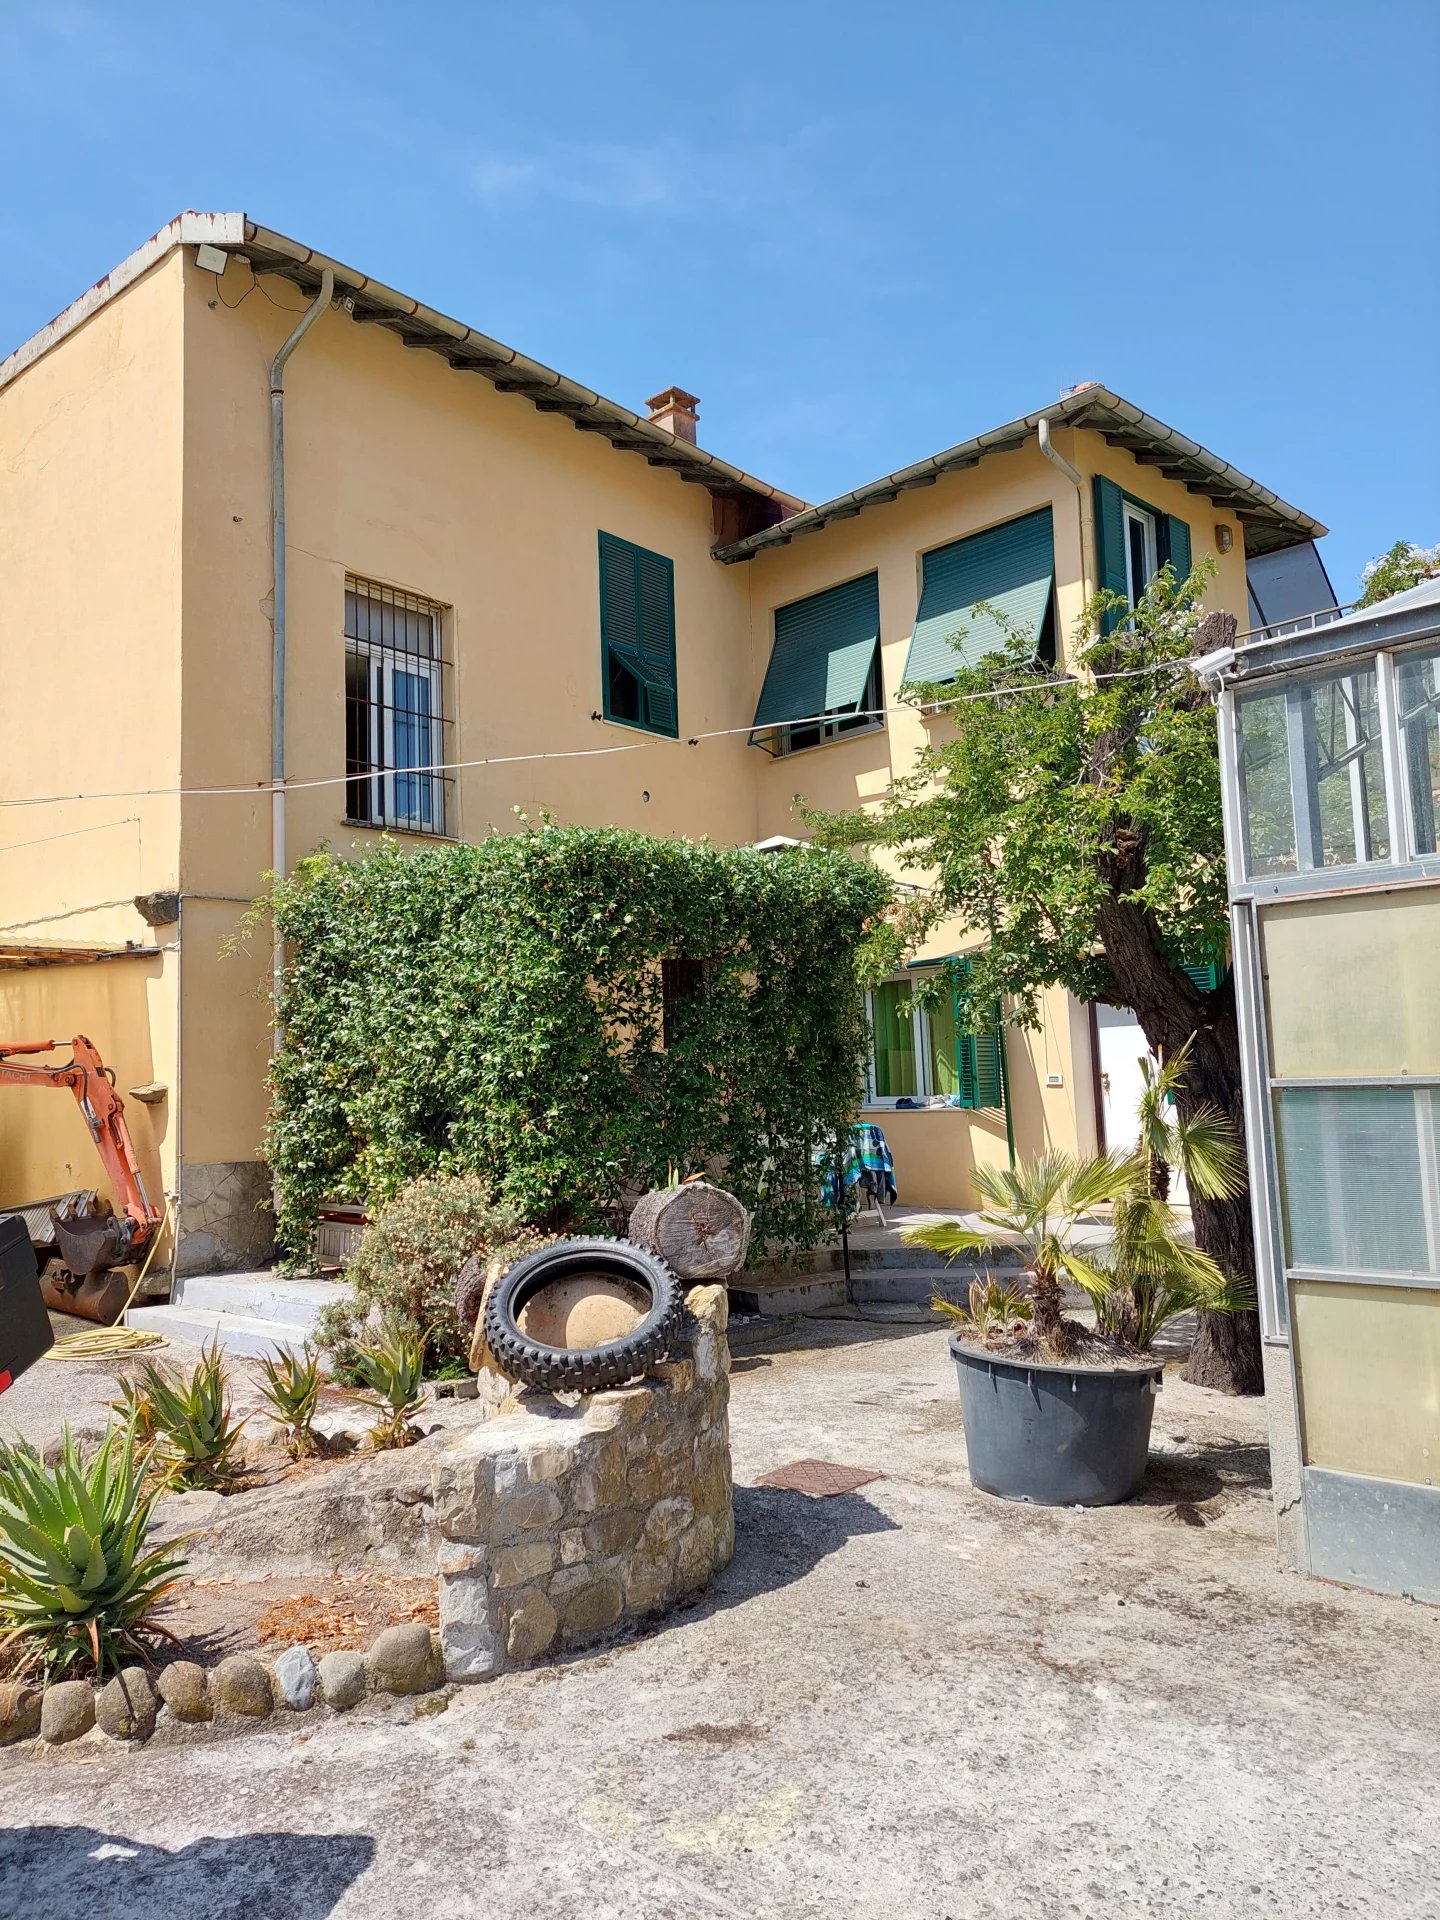 Sale House - Bordighera - Italy